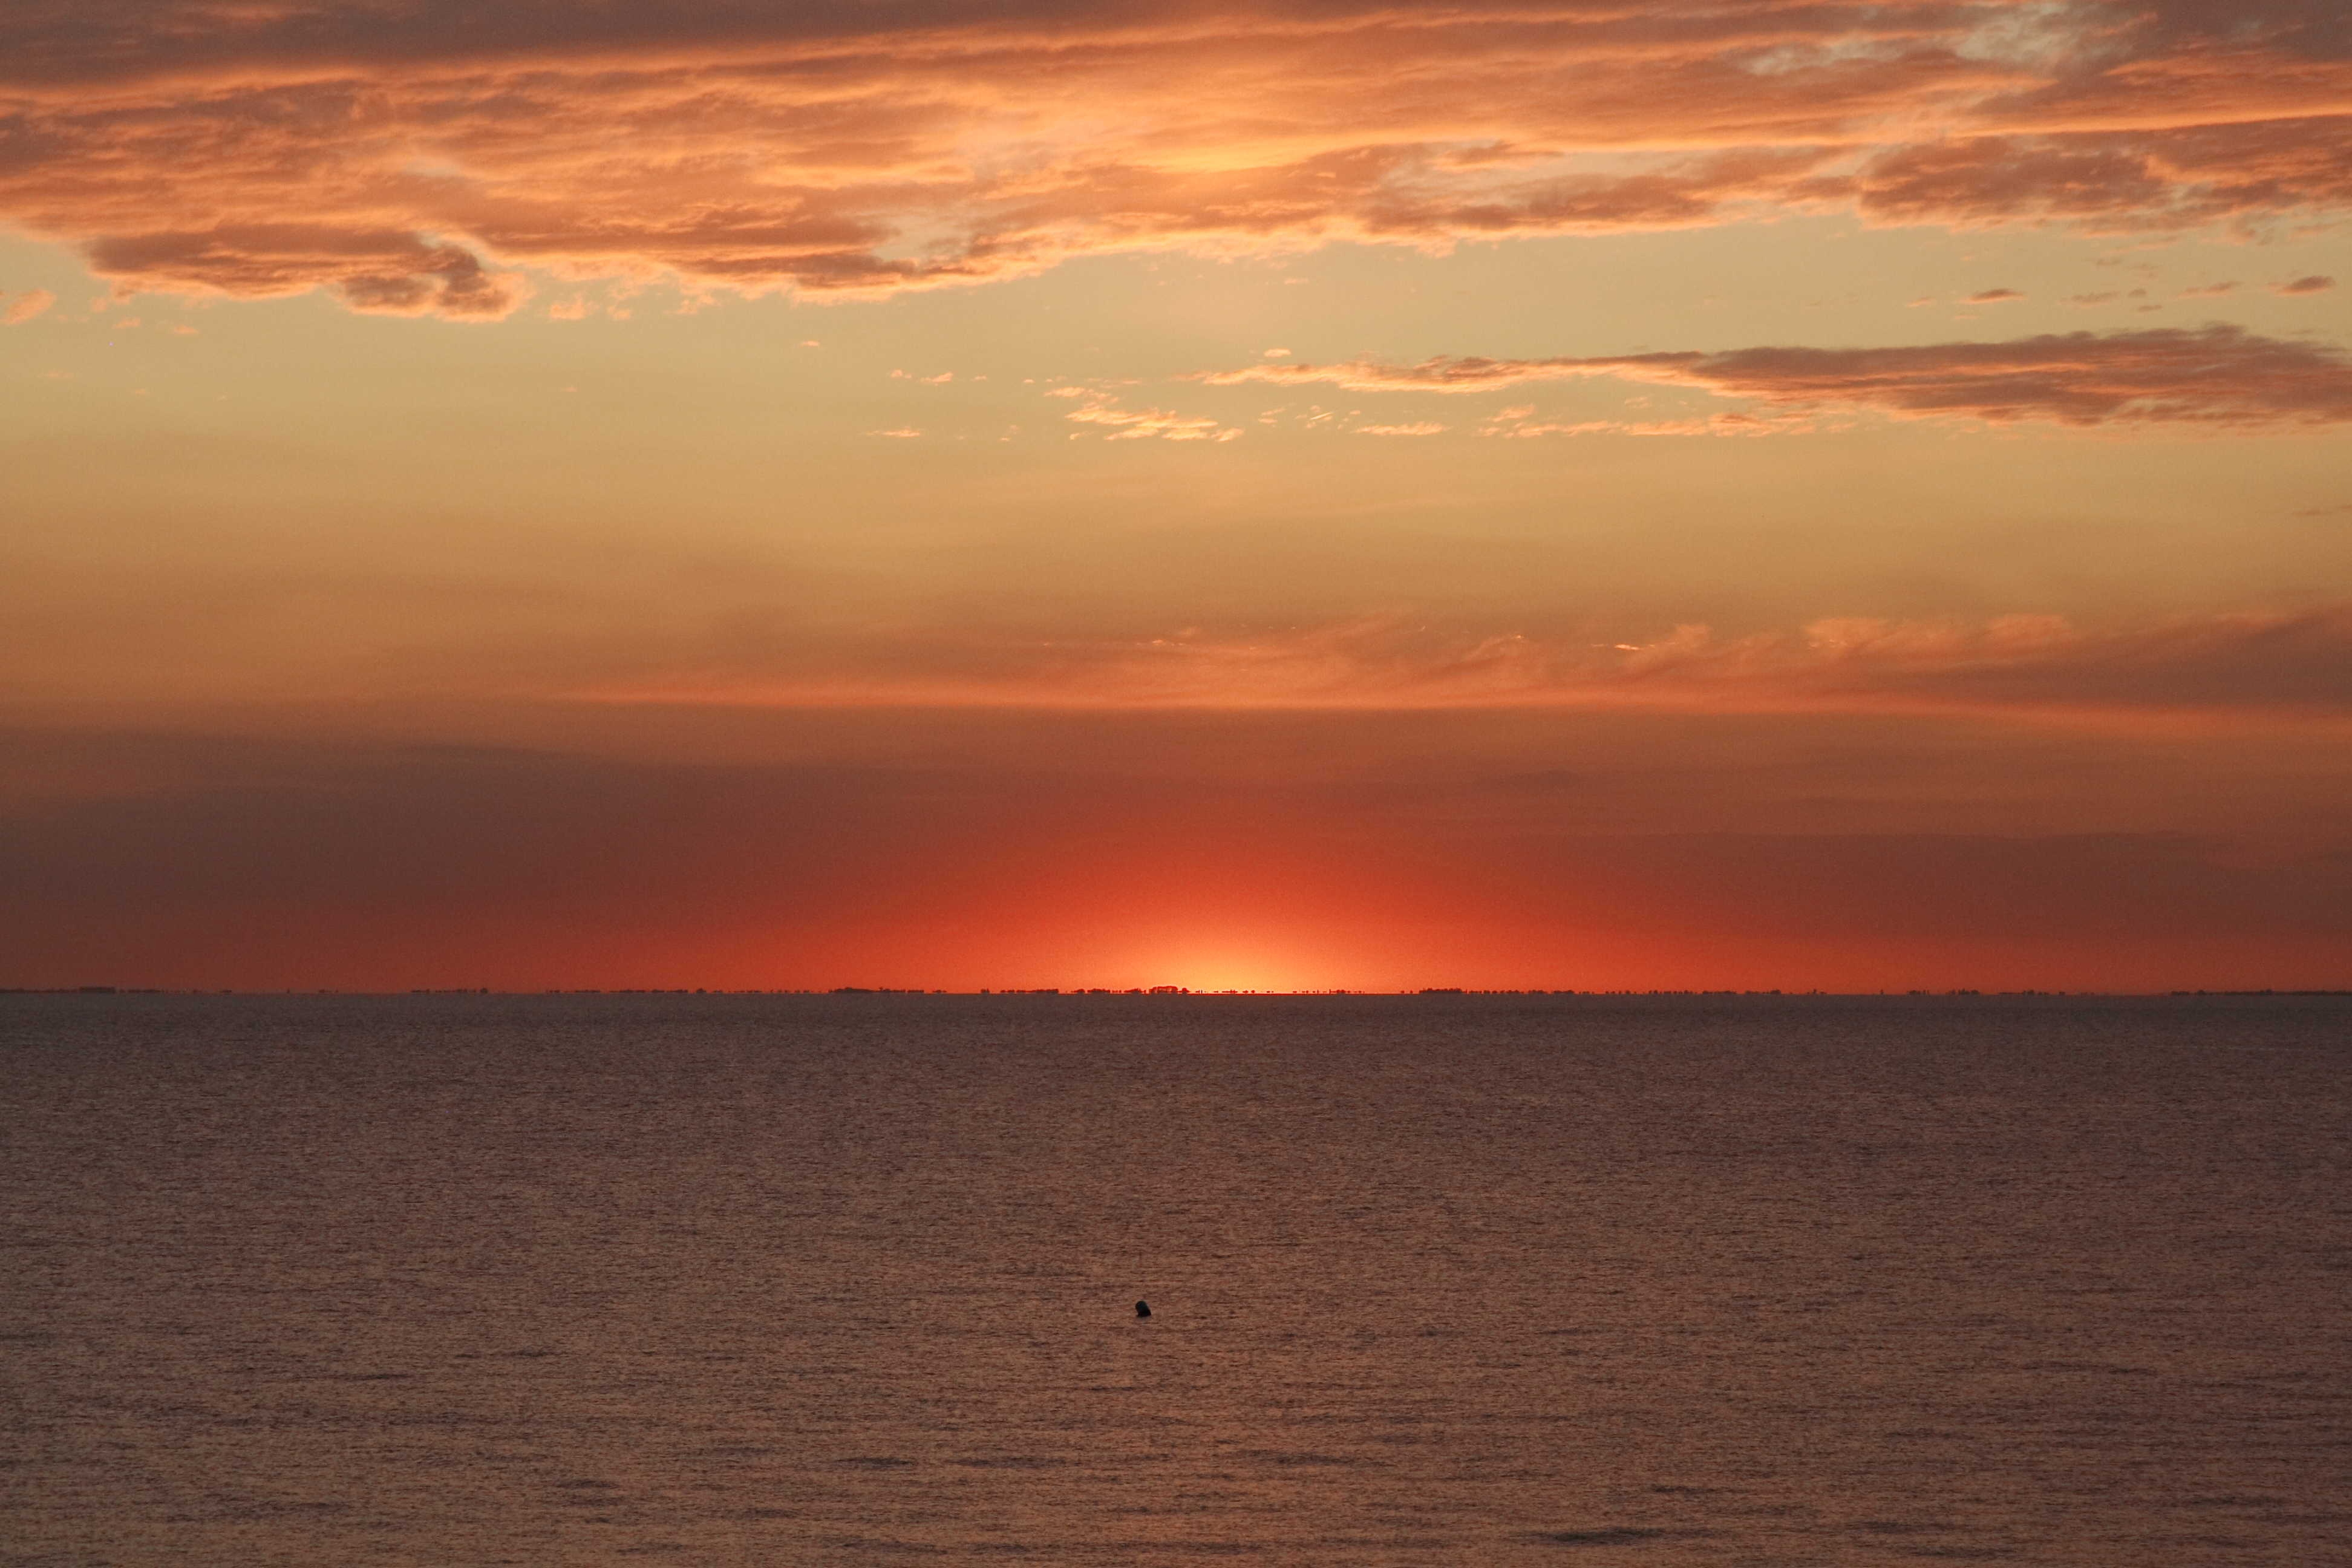 Photo's of a Setting Sun Over a Western Sea | mainscough